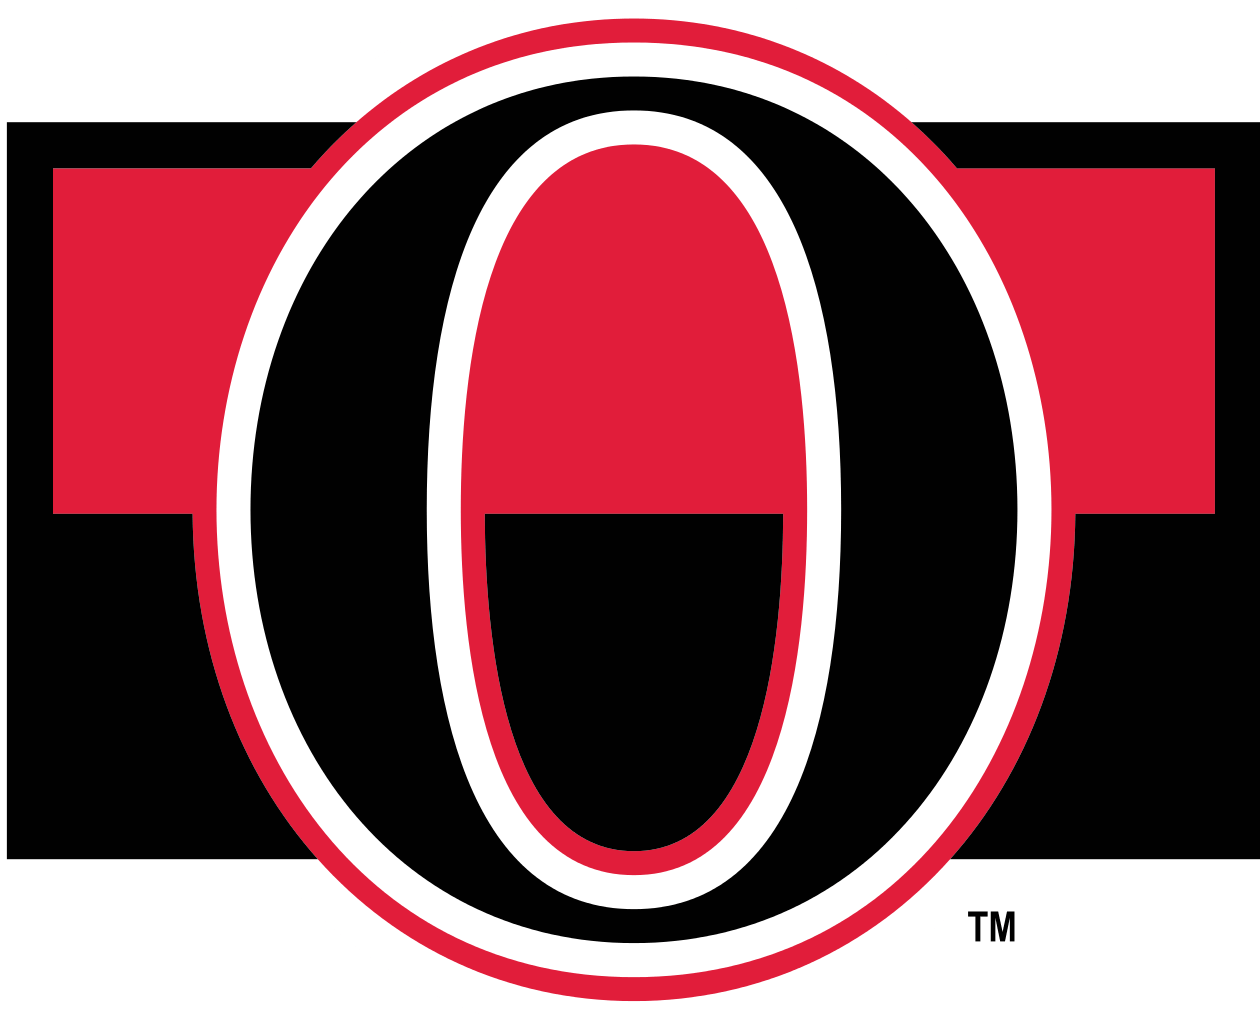 Senator Logo - What if…The Senators Changed Their Identity? | Hockey By Design